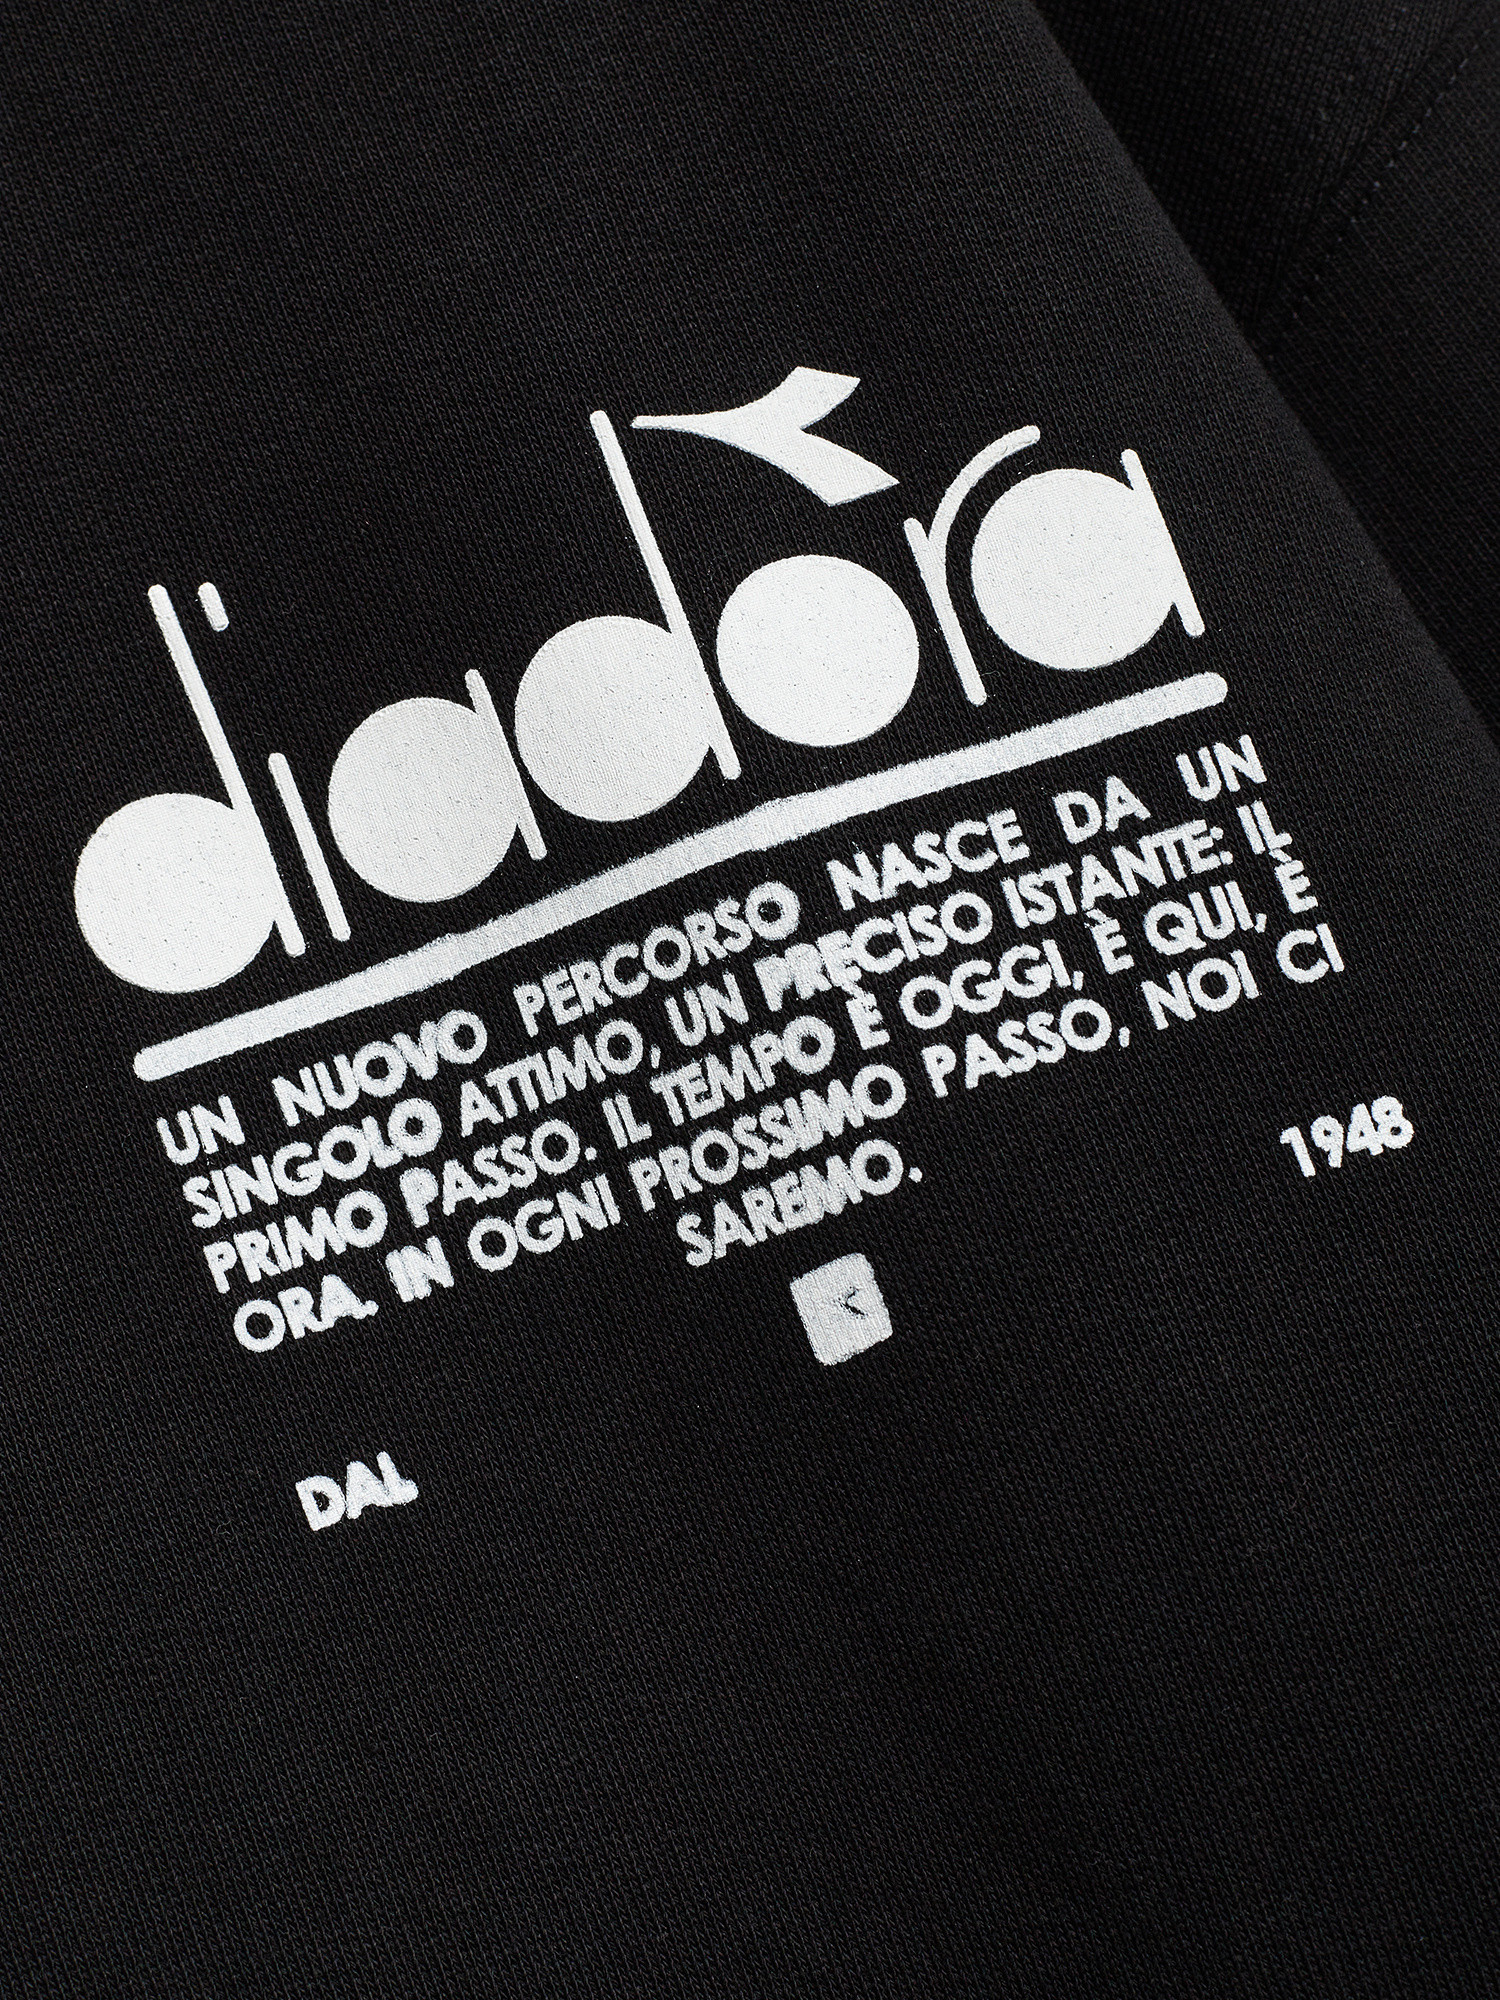 Diadora - Felpa girocollo manifesto in cotone, Nero, large image number 1